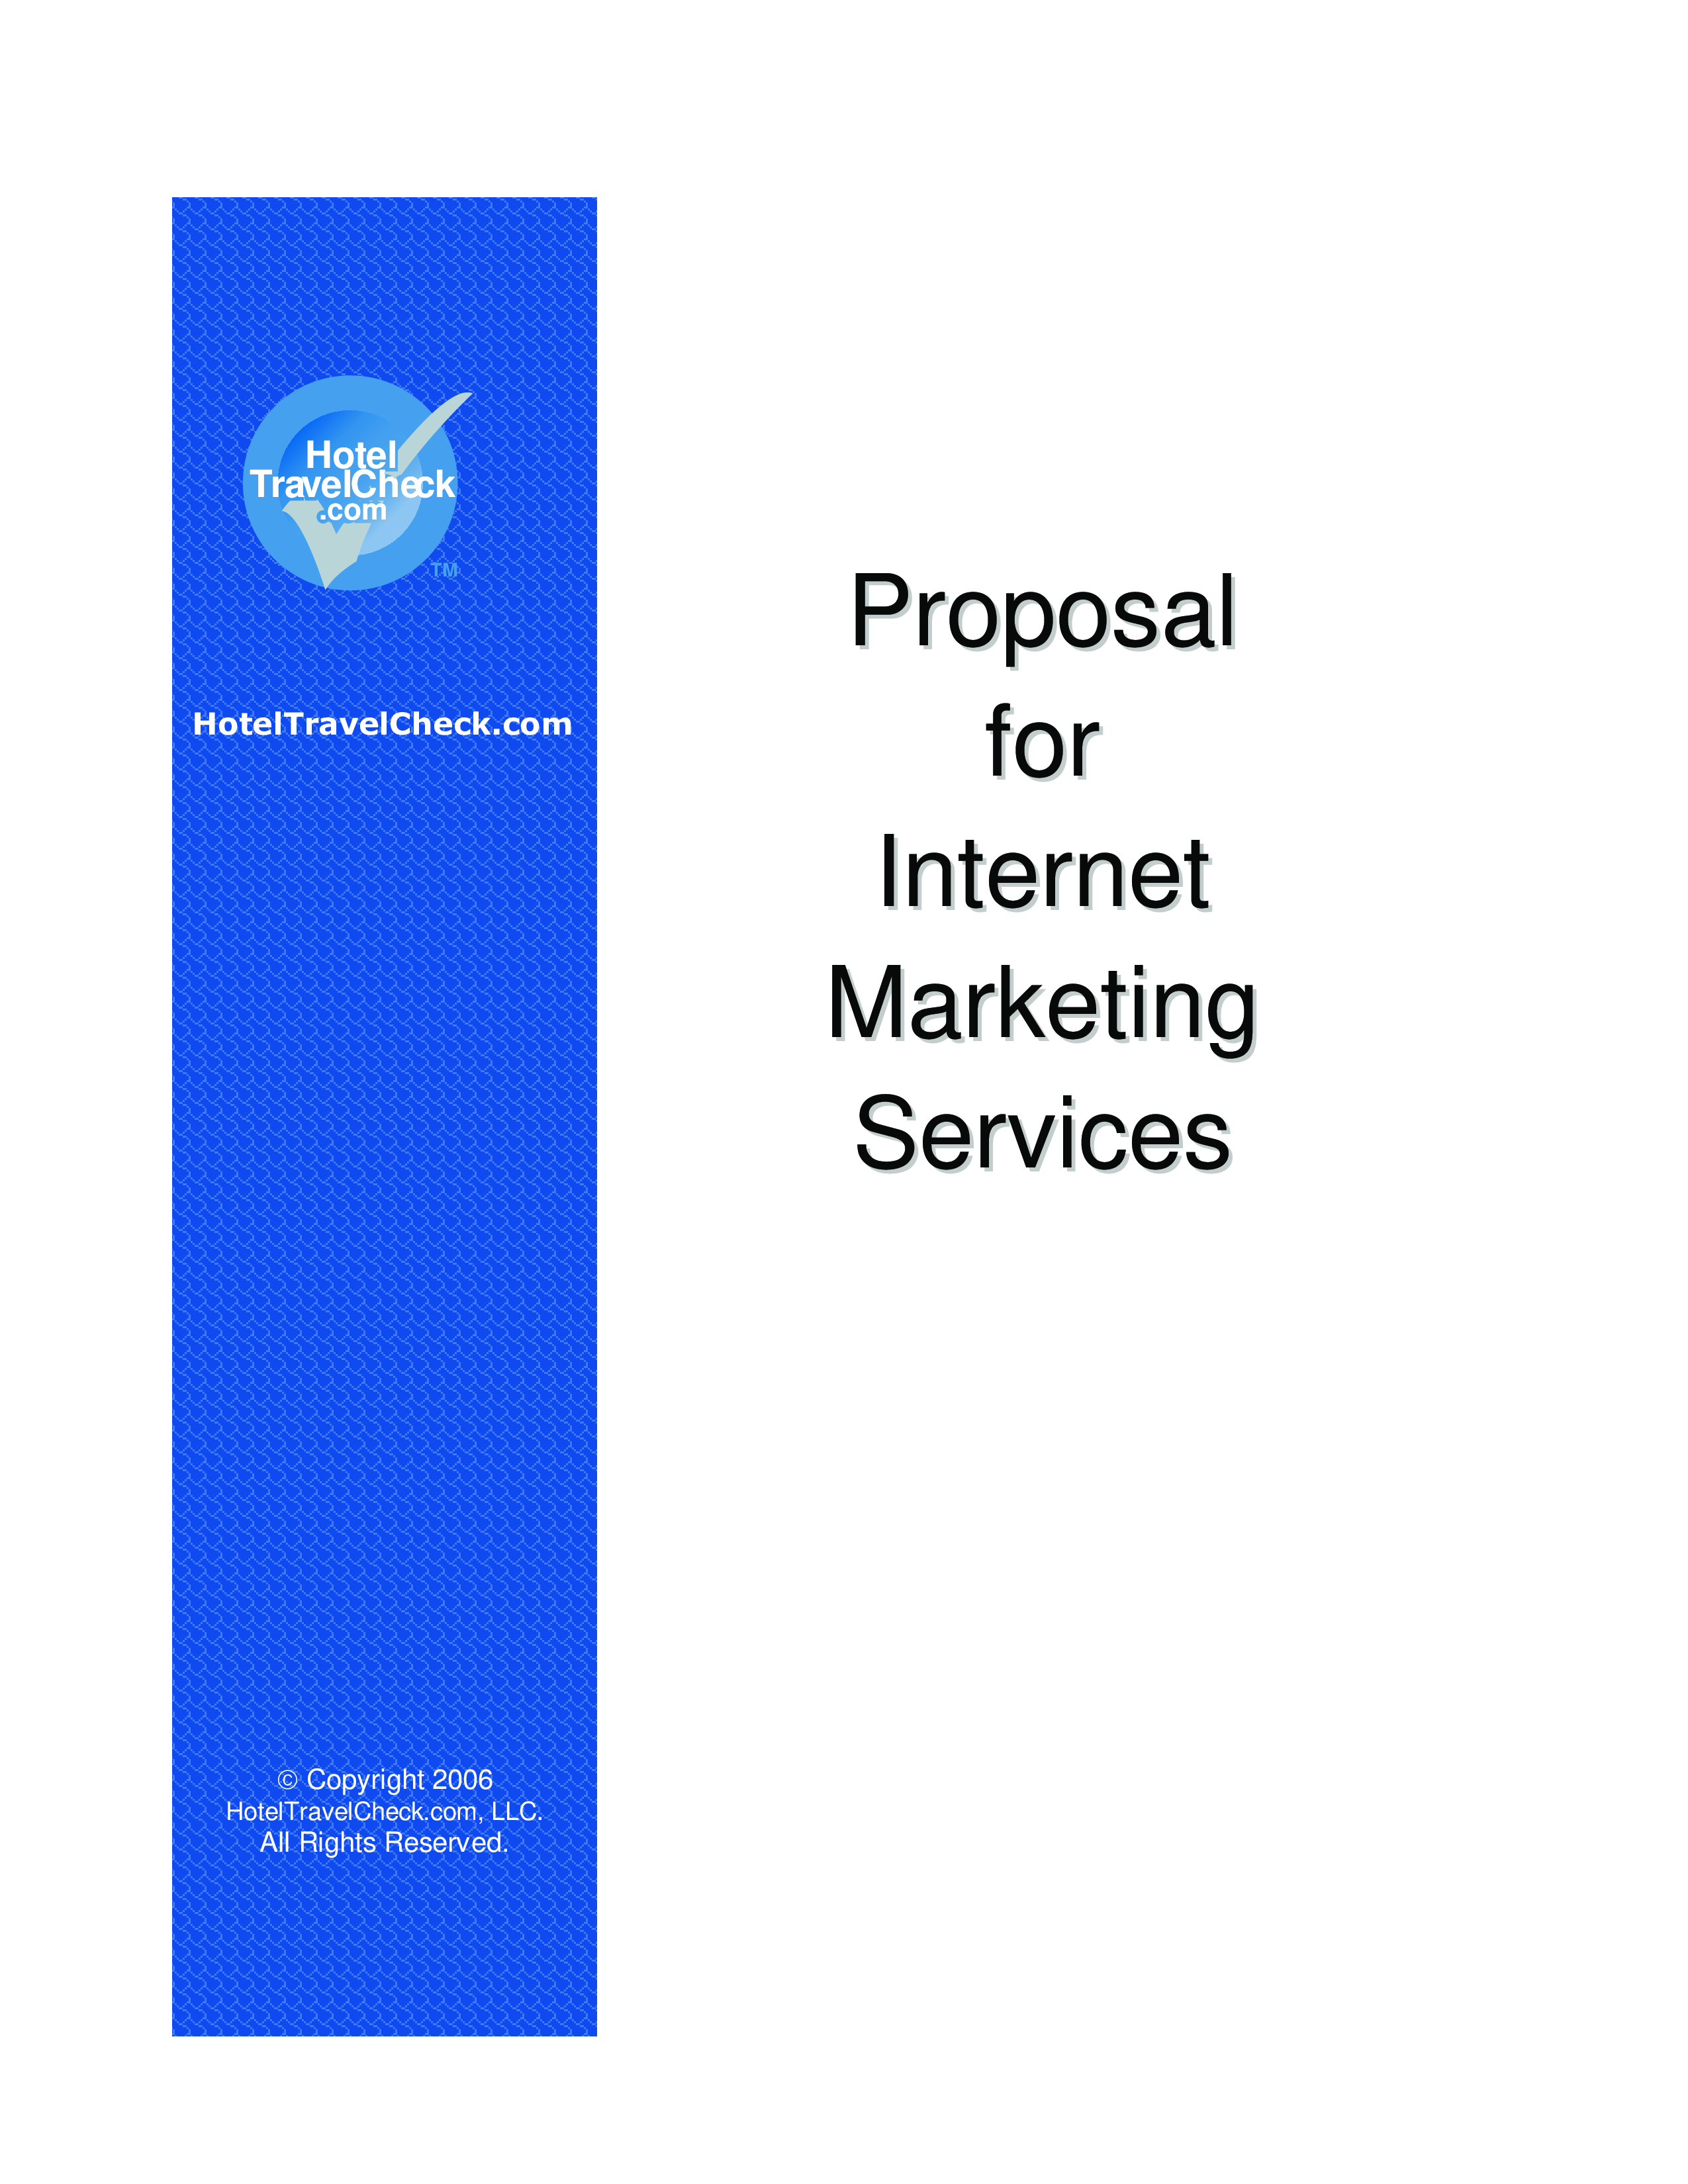 Internet Marketing Proposal main image